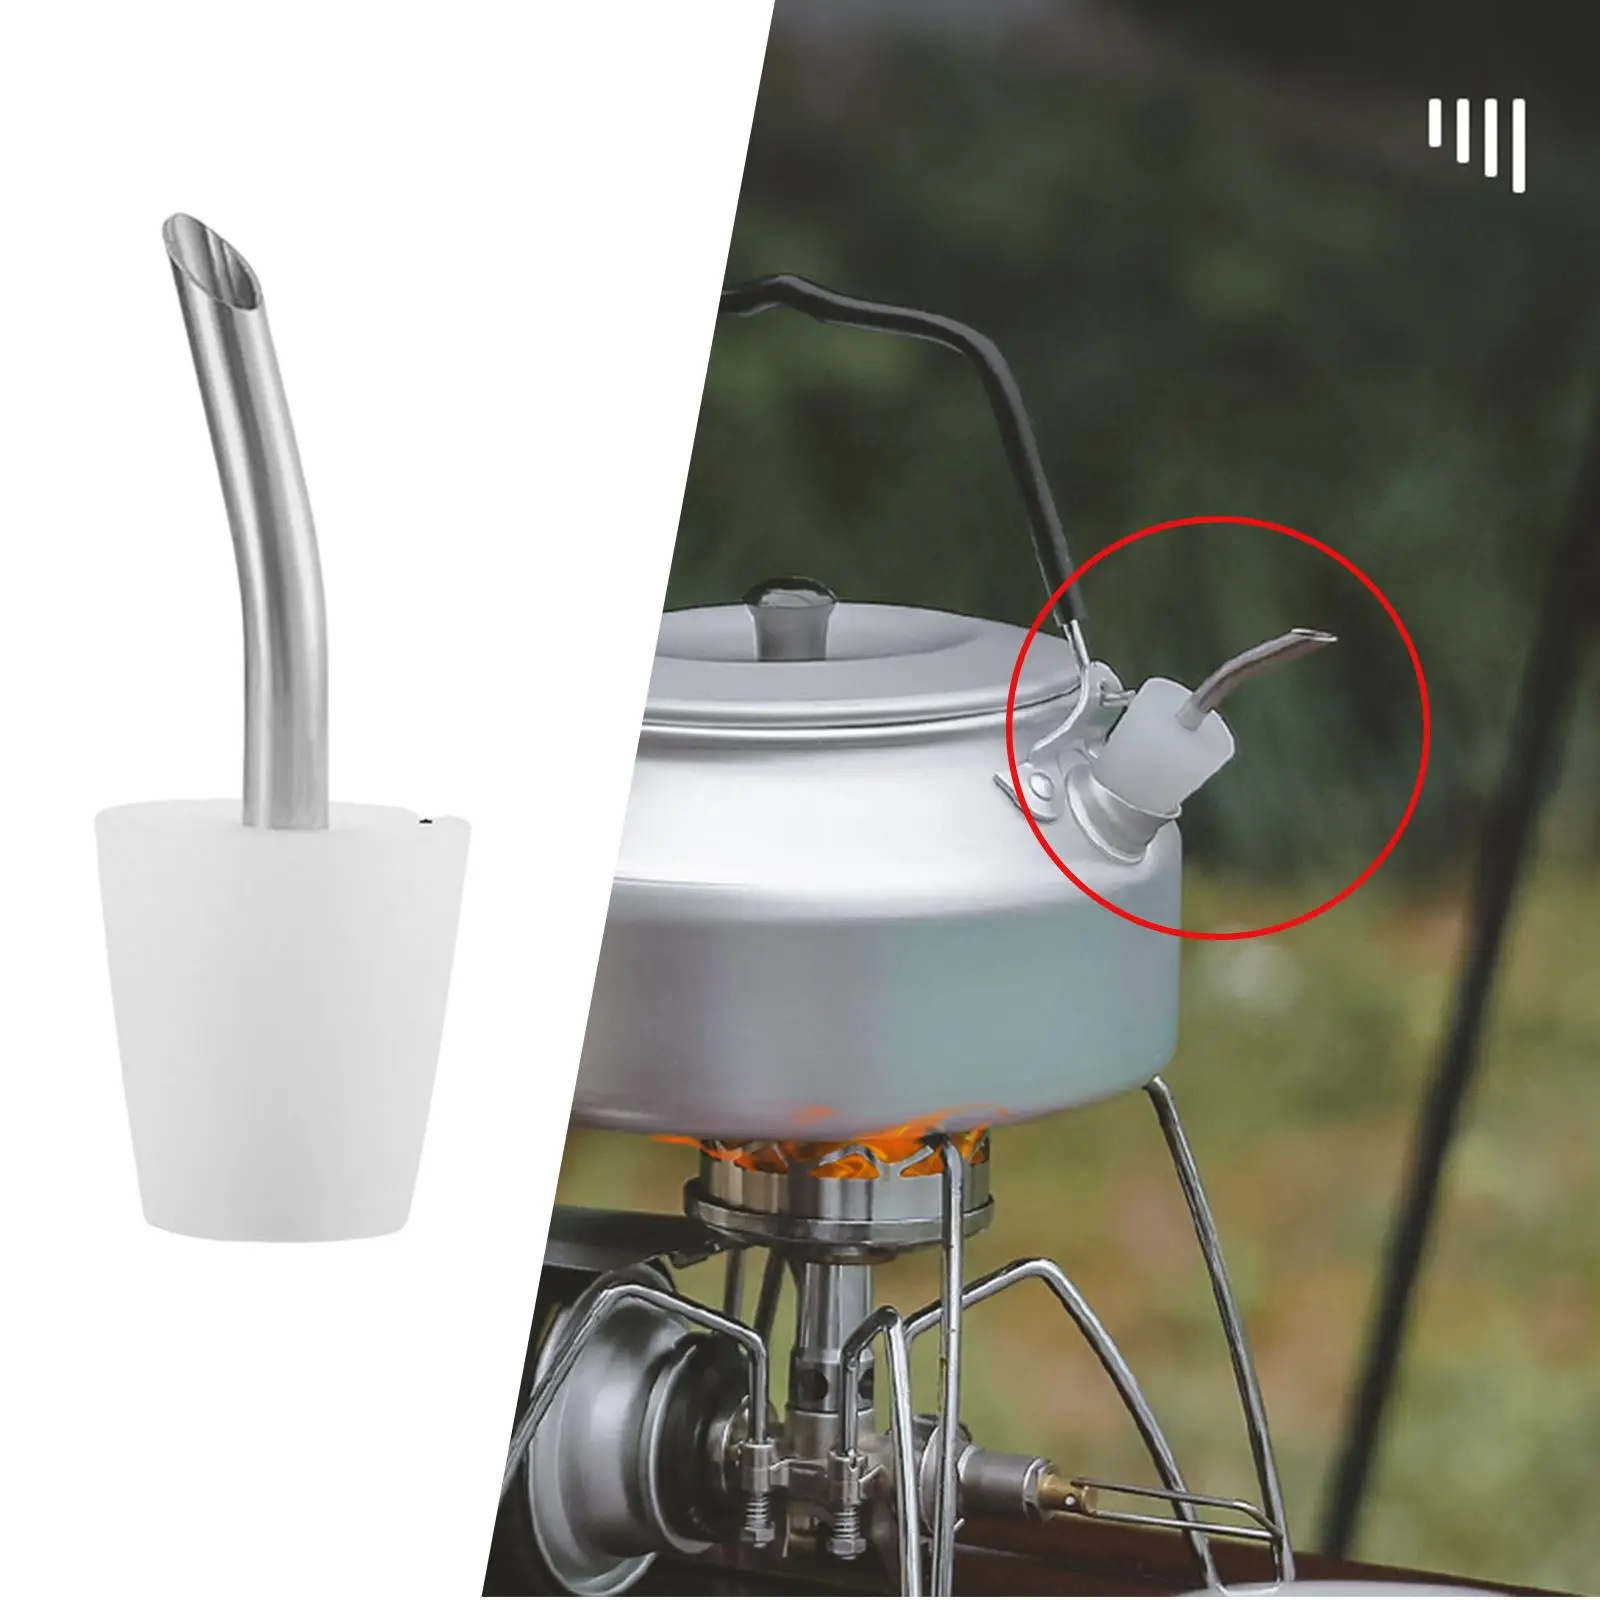 Portable Outdoor Kettle Spout Convert Faucet Replacement Accessories Conversion Water Nozzle Teapot Mouths for Camping Travel